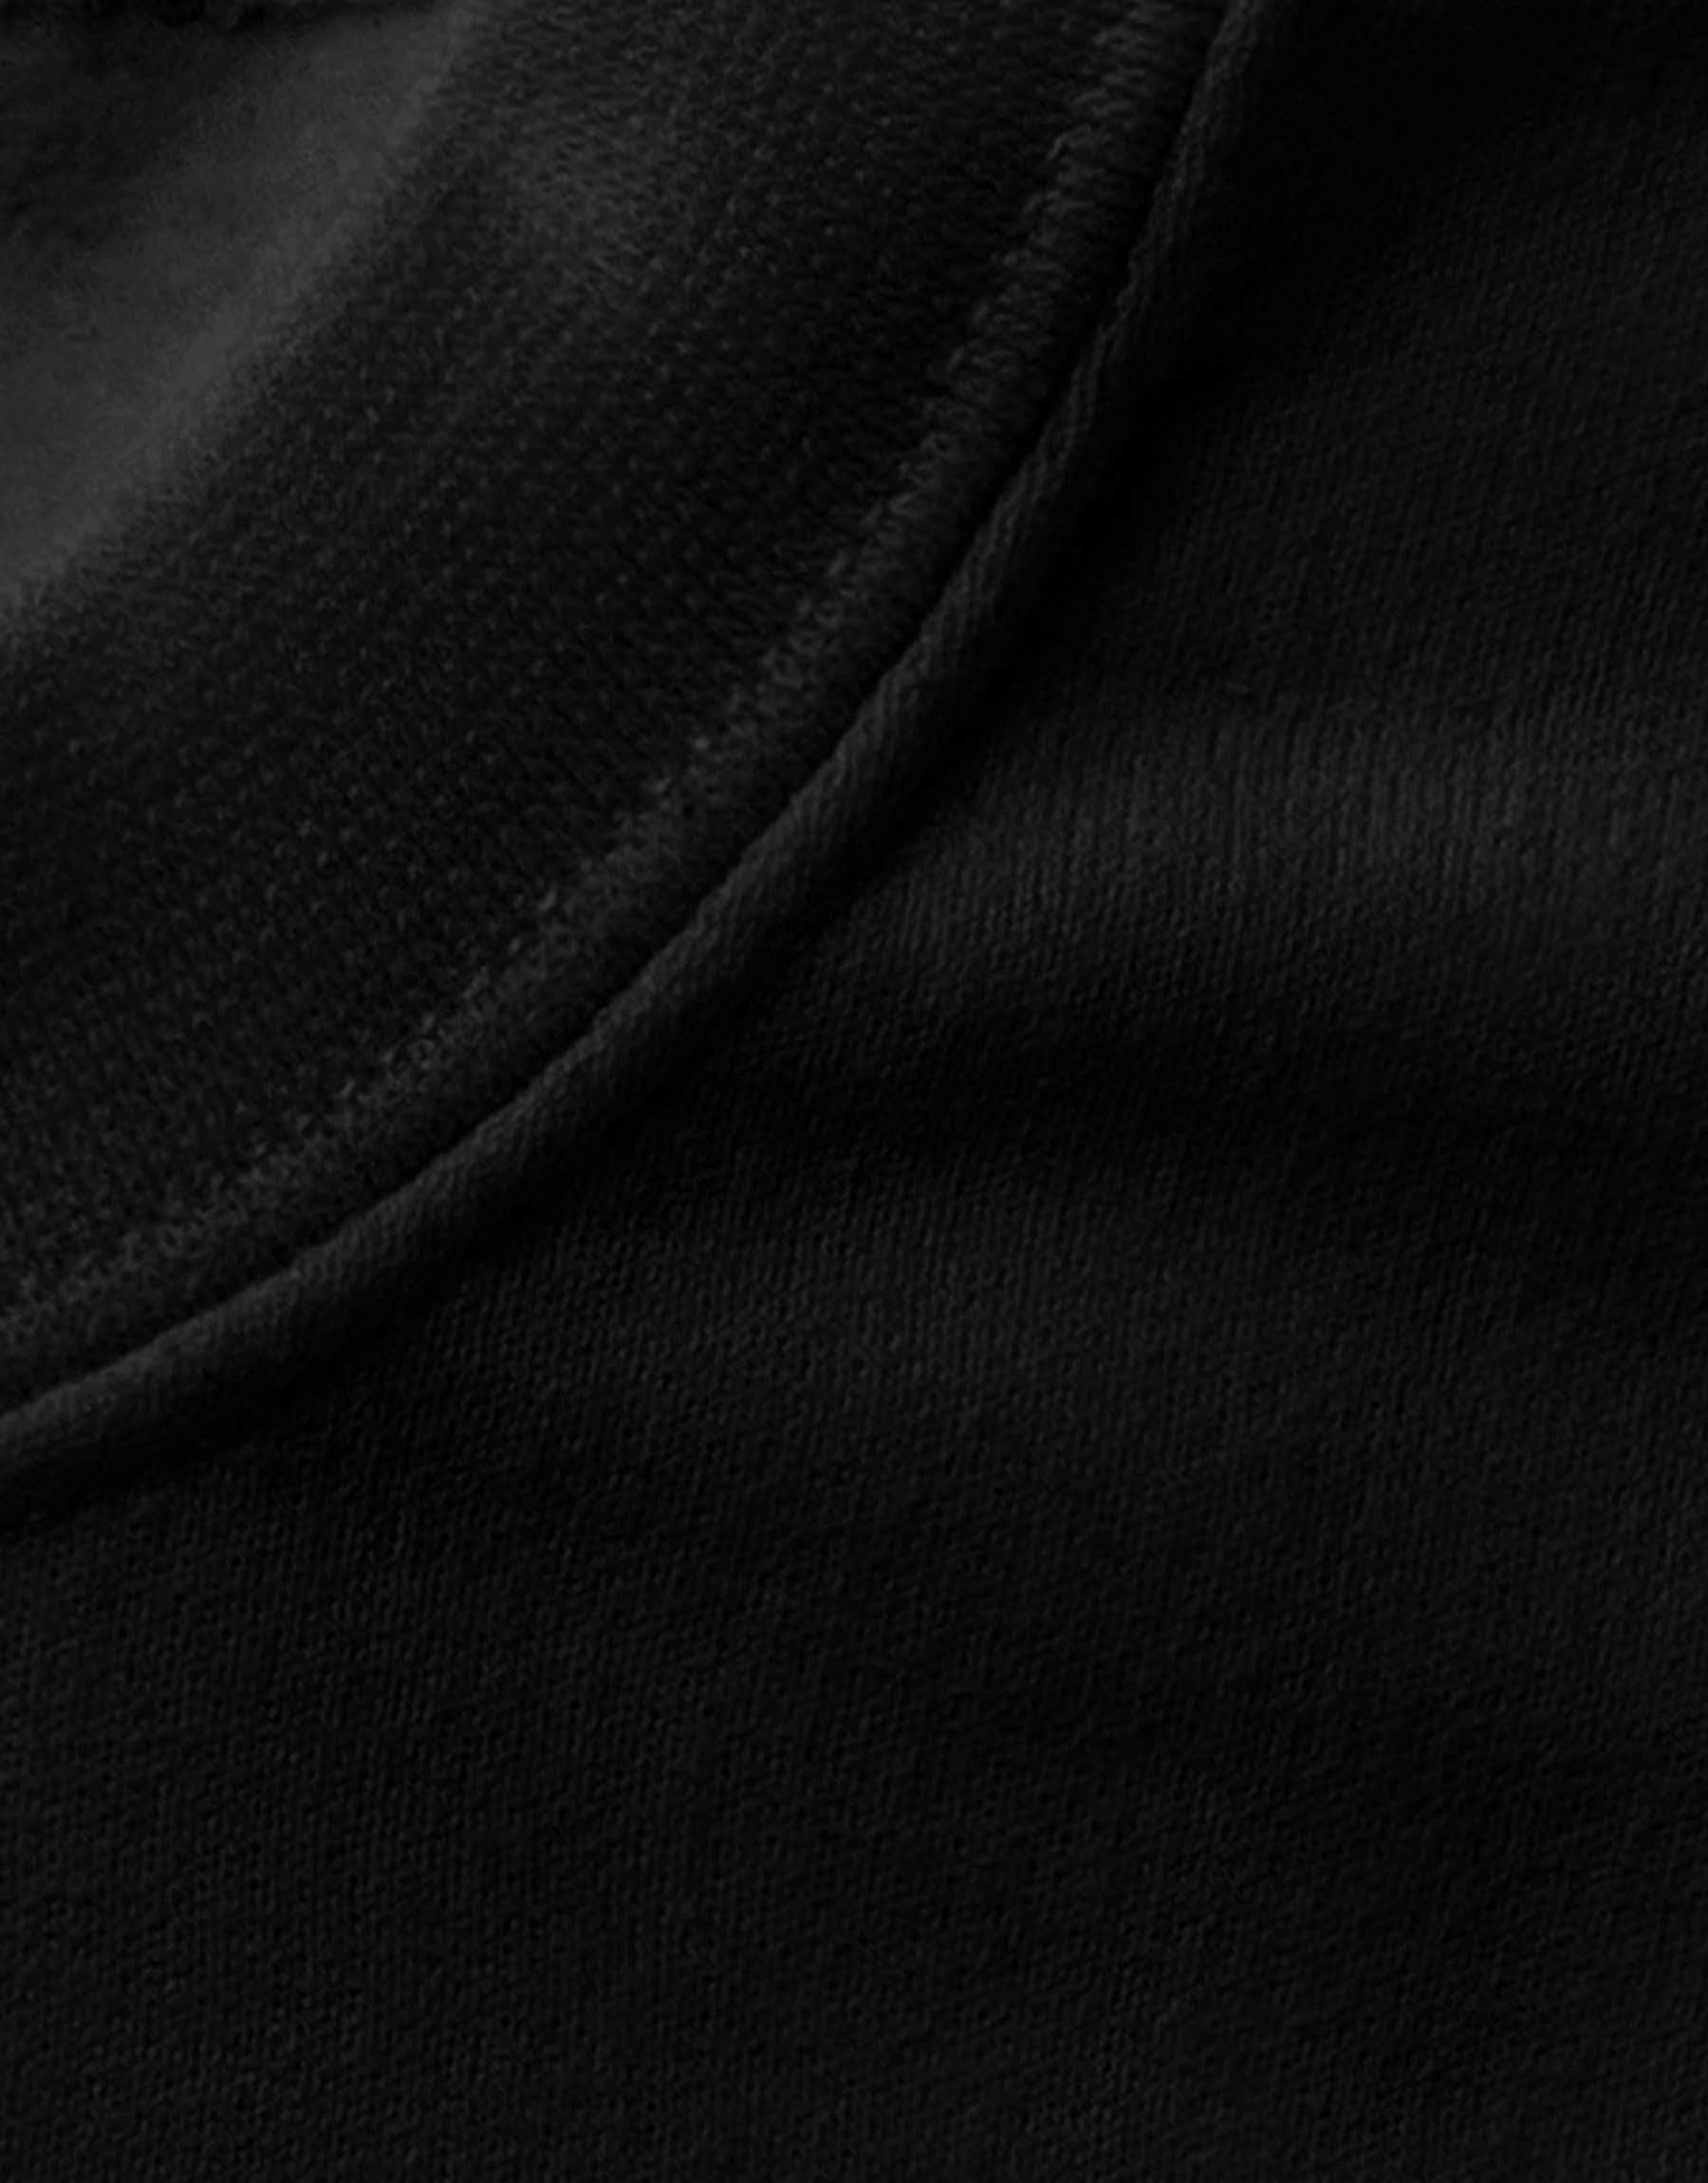 Hebbi Lyad Lagche Unisex Bengali t shirt - Black - 499.00 - TEEGURUJI - Free Shipping